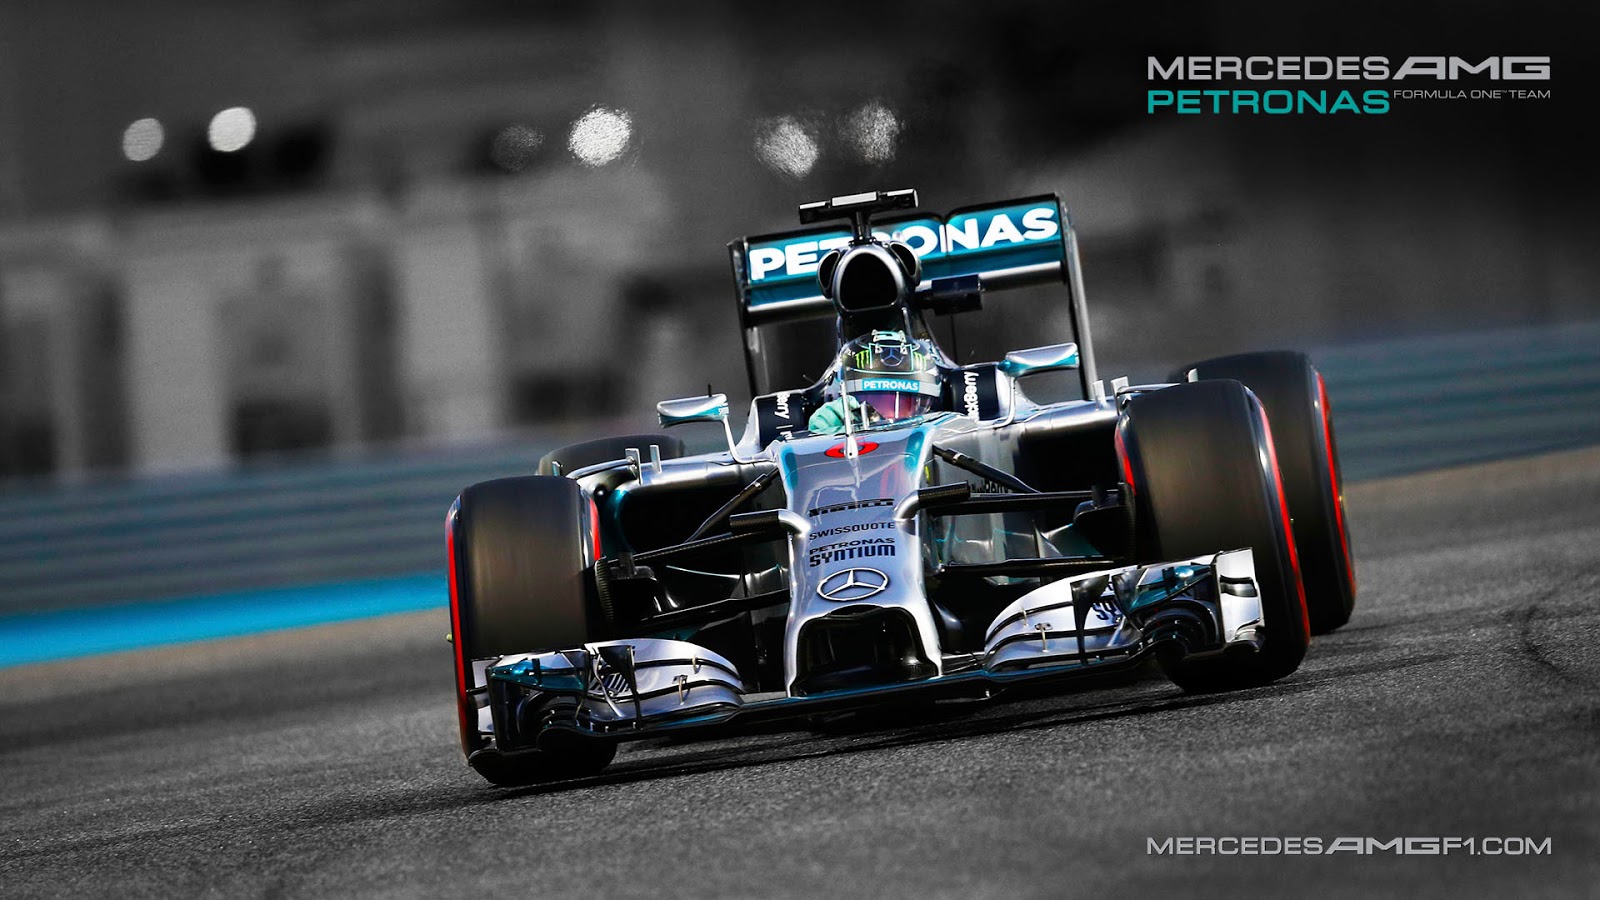 Mercedes AMG Petronas Wallpaperjpg